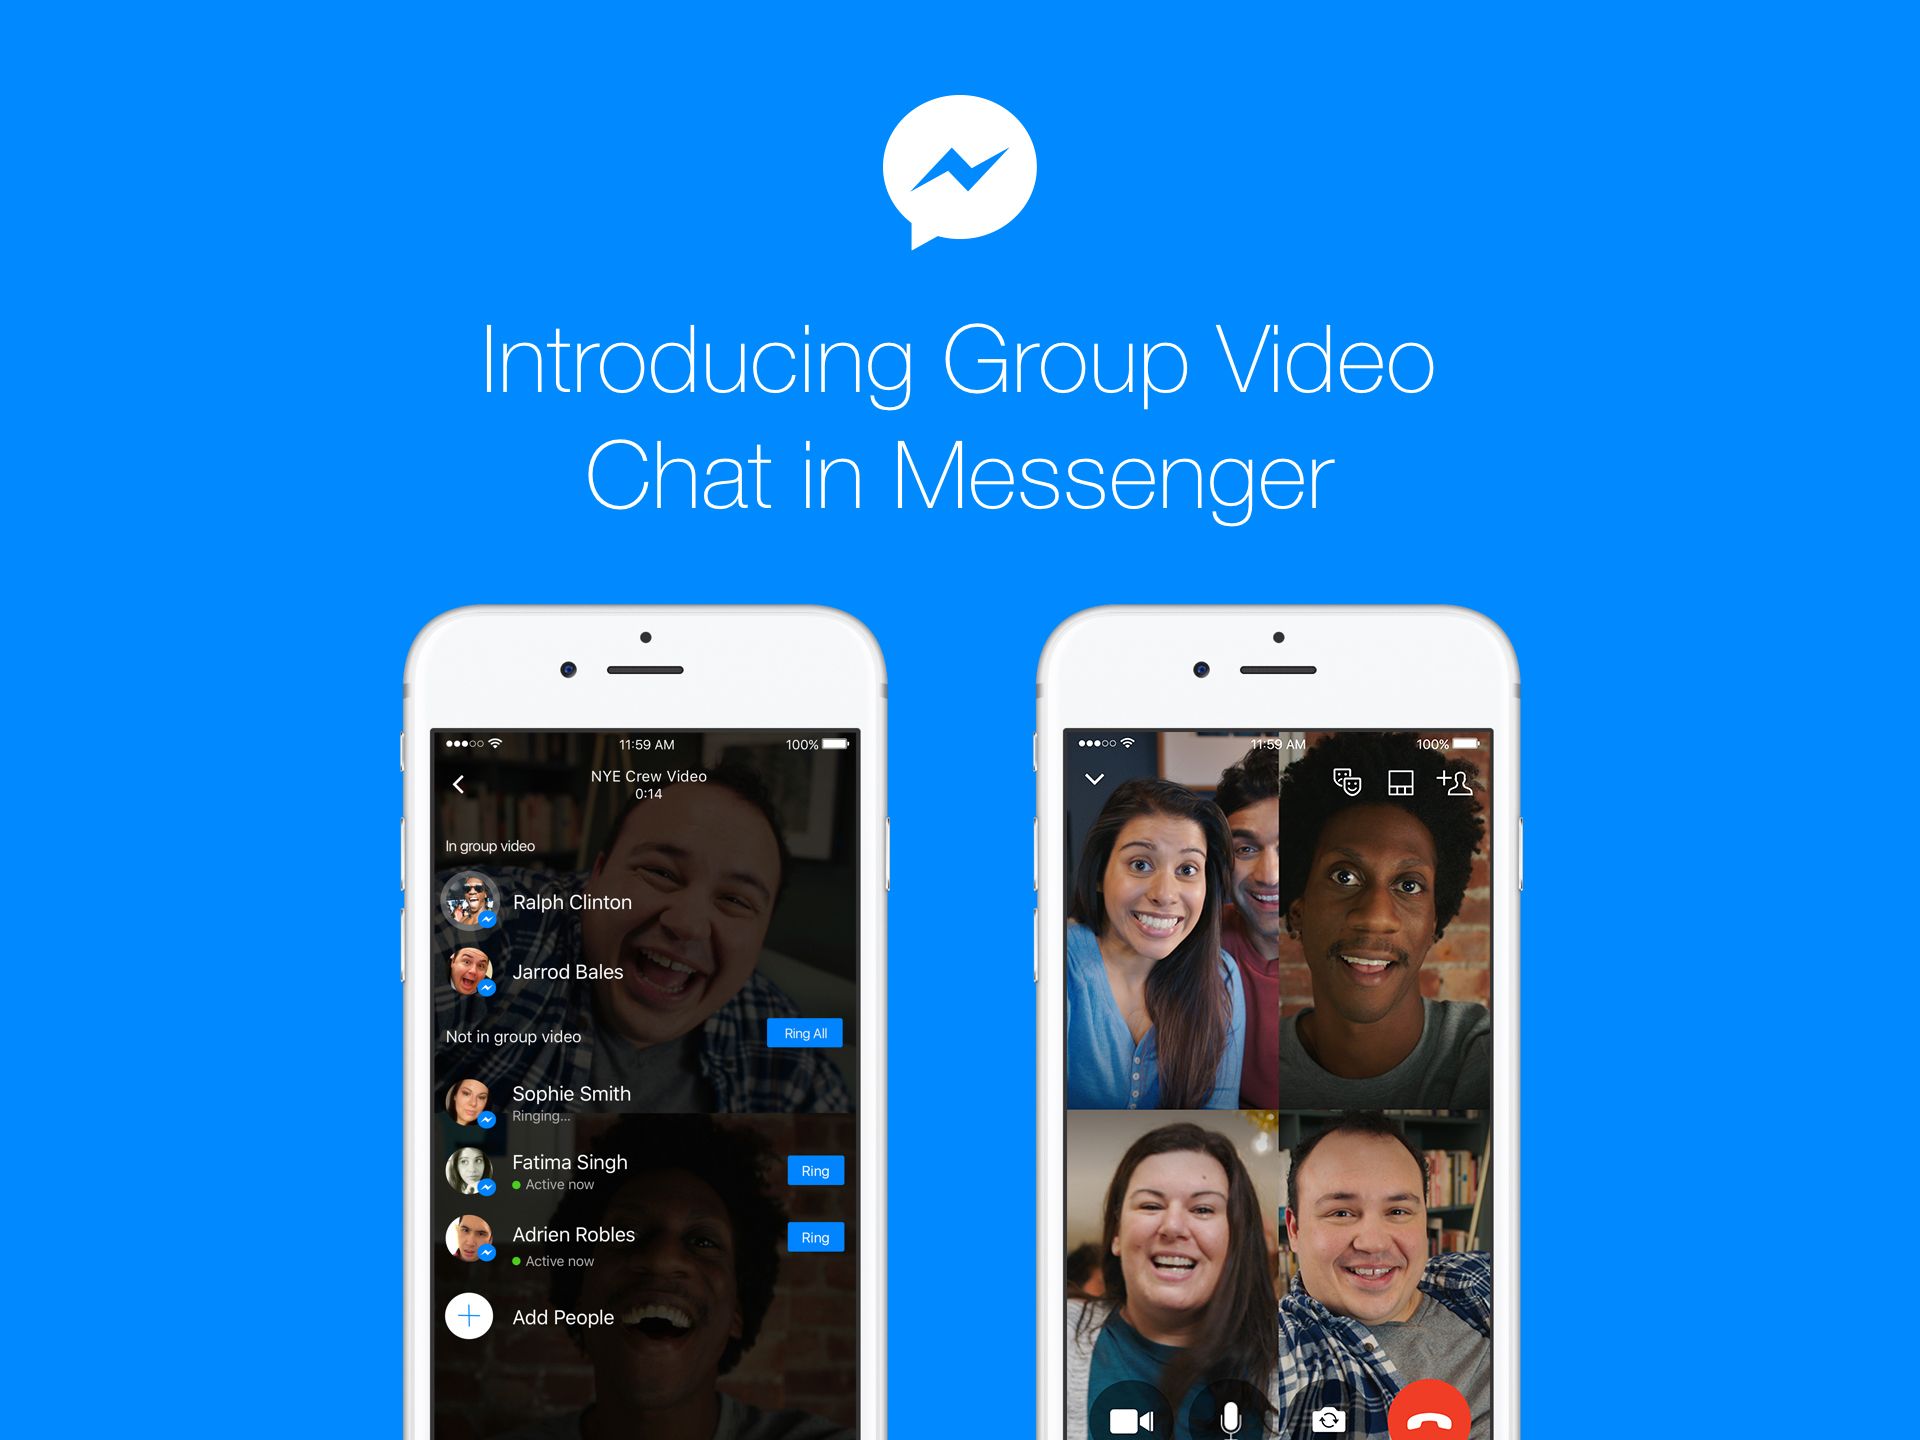 Facebook-Messenger-Group-Video-Chat-teaser-001.jpg